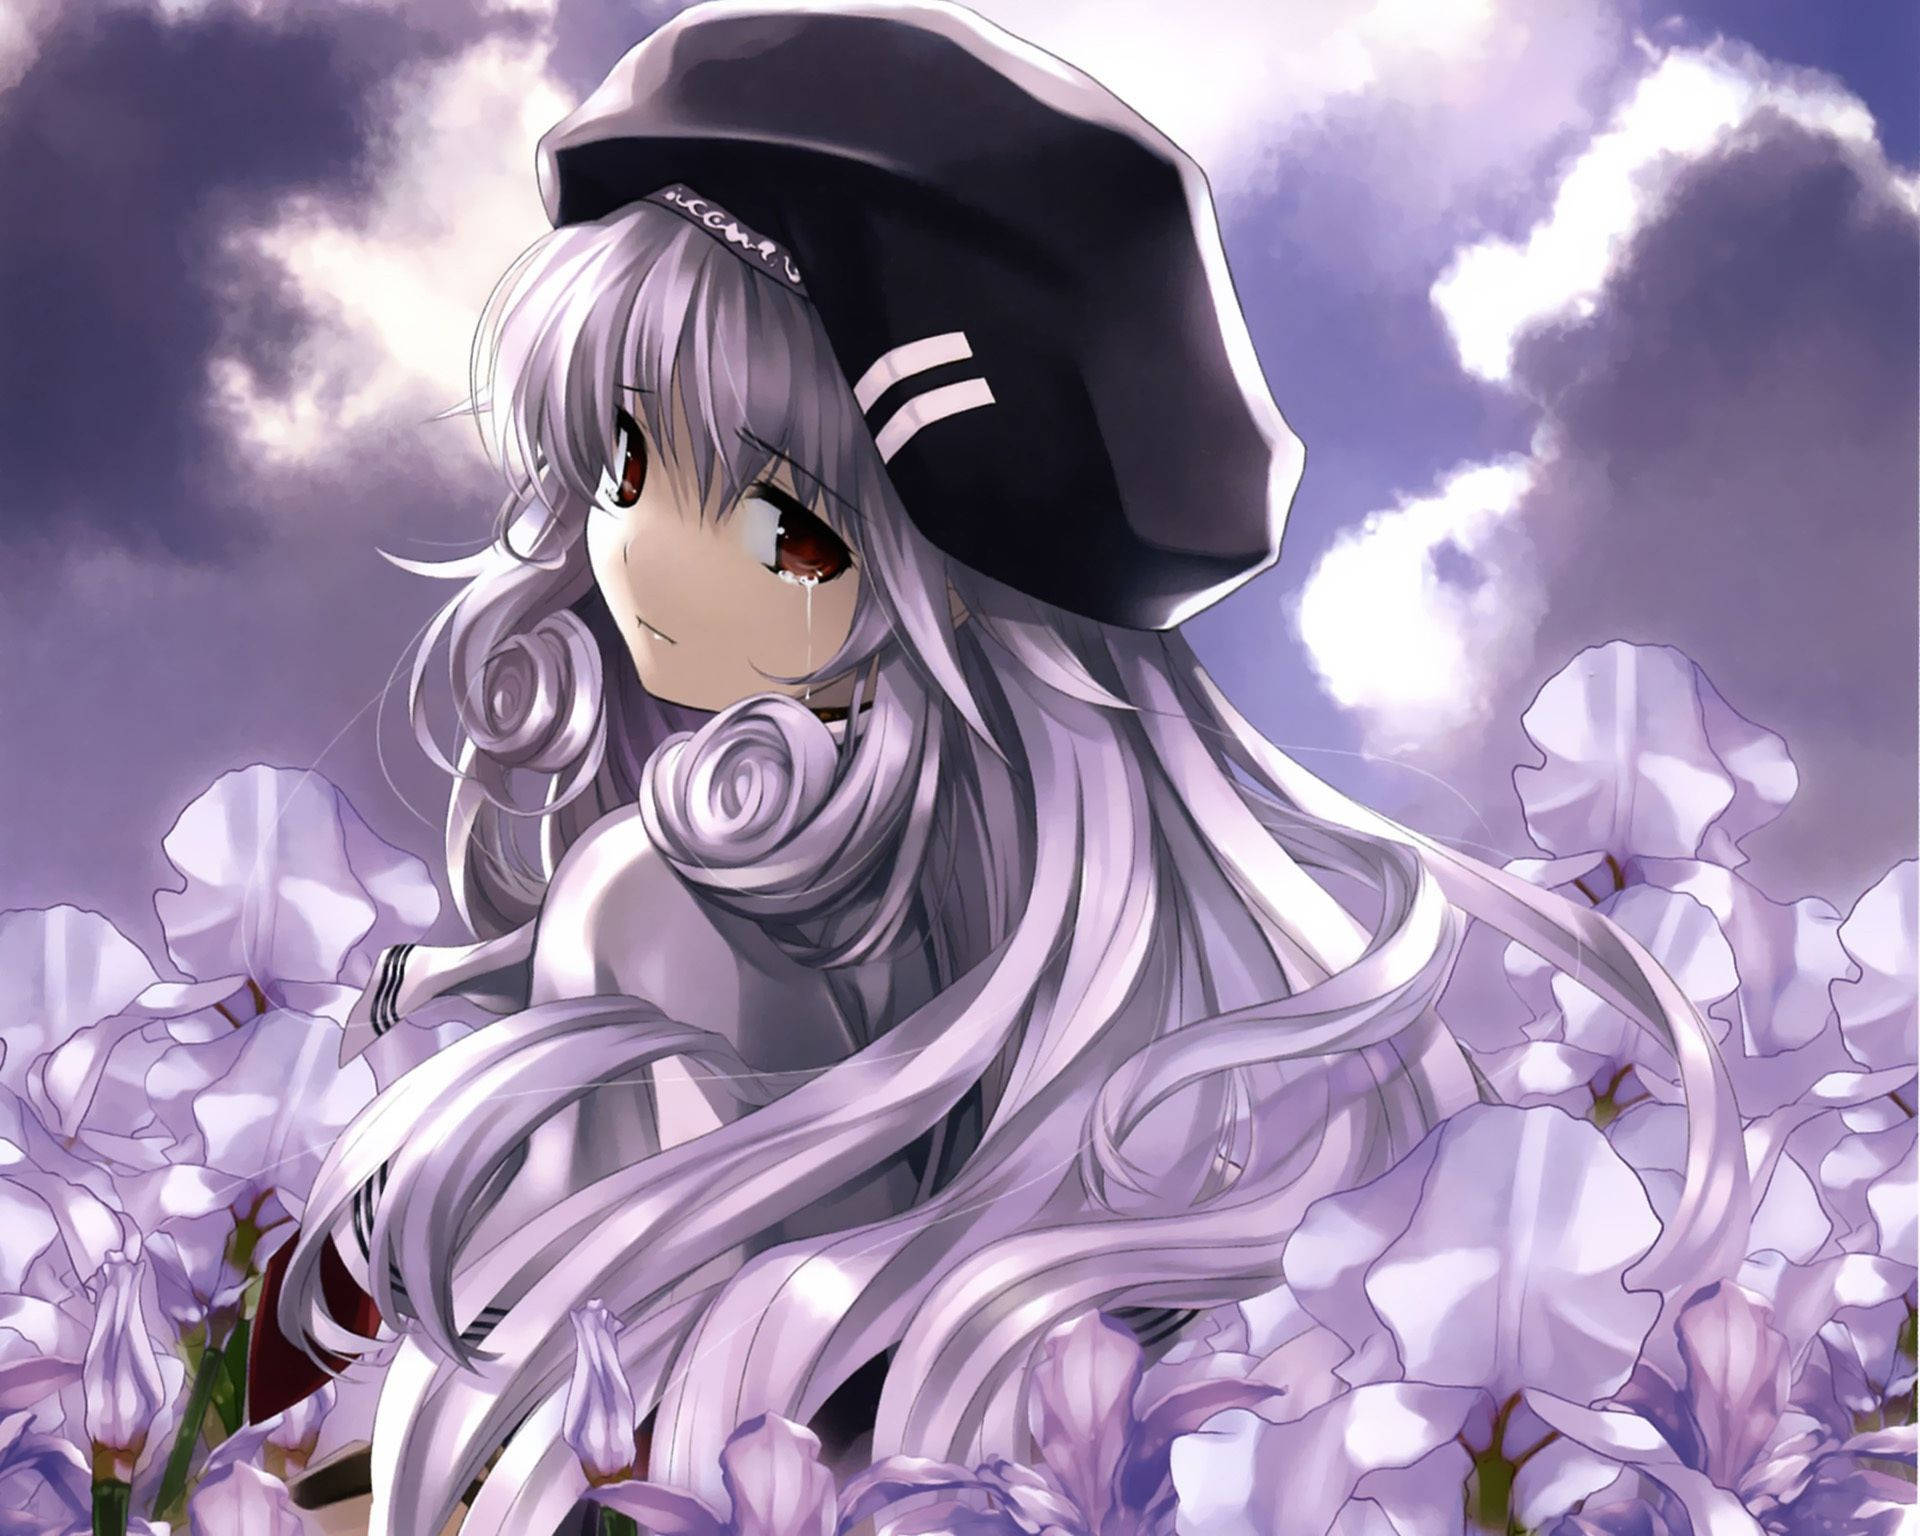 Sad Anime Girl In Flower Field